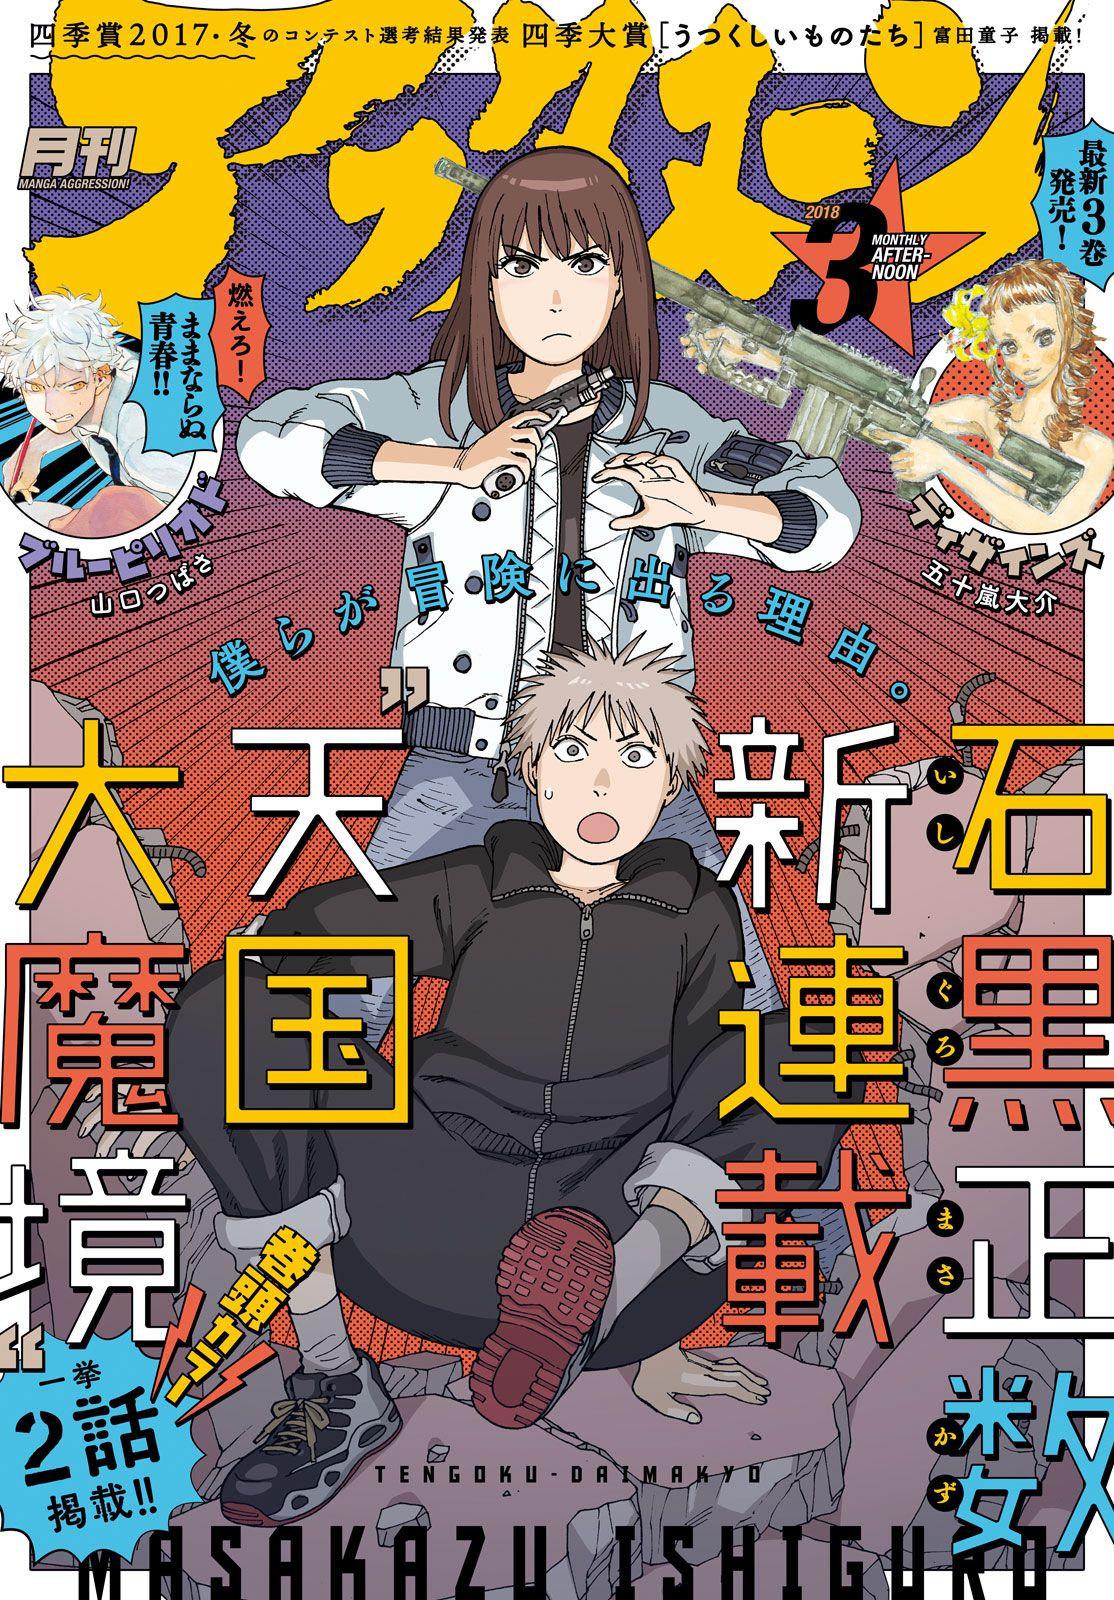 Tengoku Daimakyou Manga Online Free - Manganelo